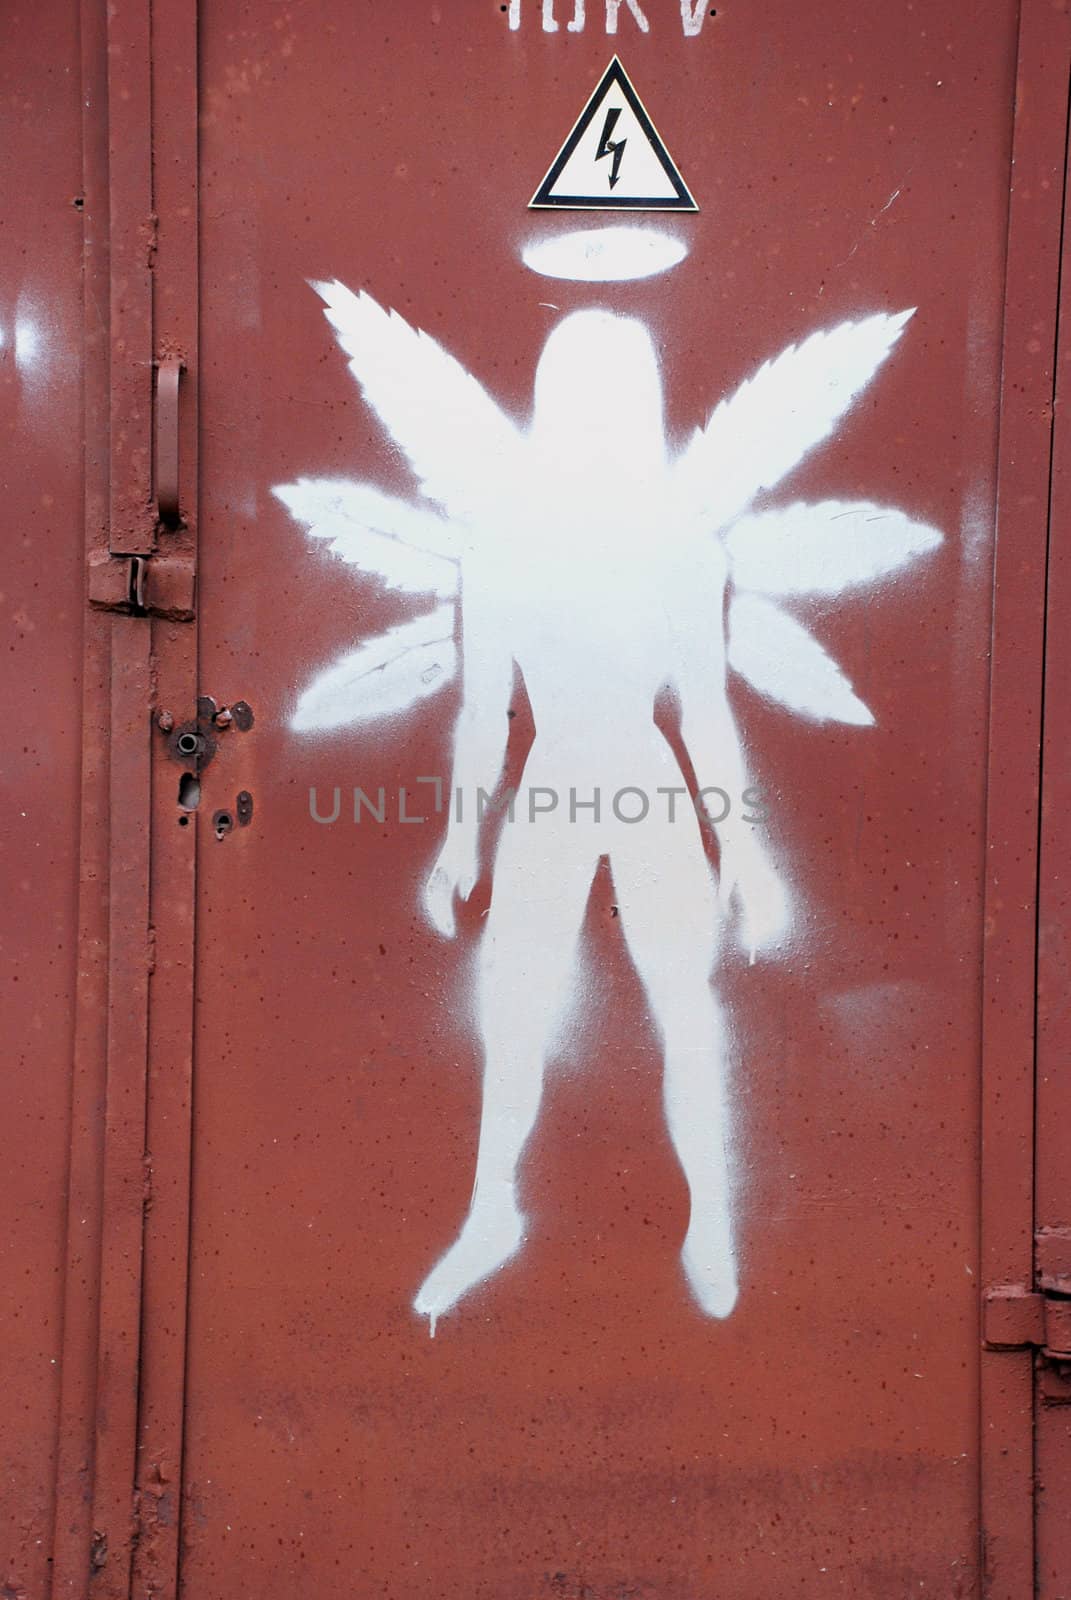 Six-winged graffiti figure by sauletas